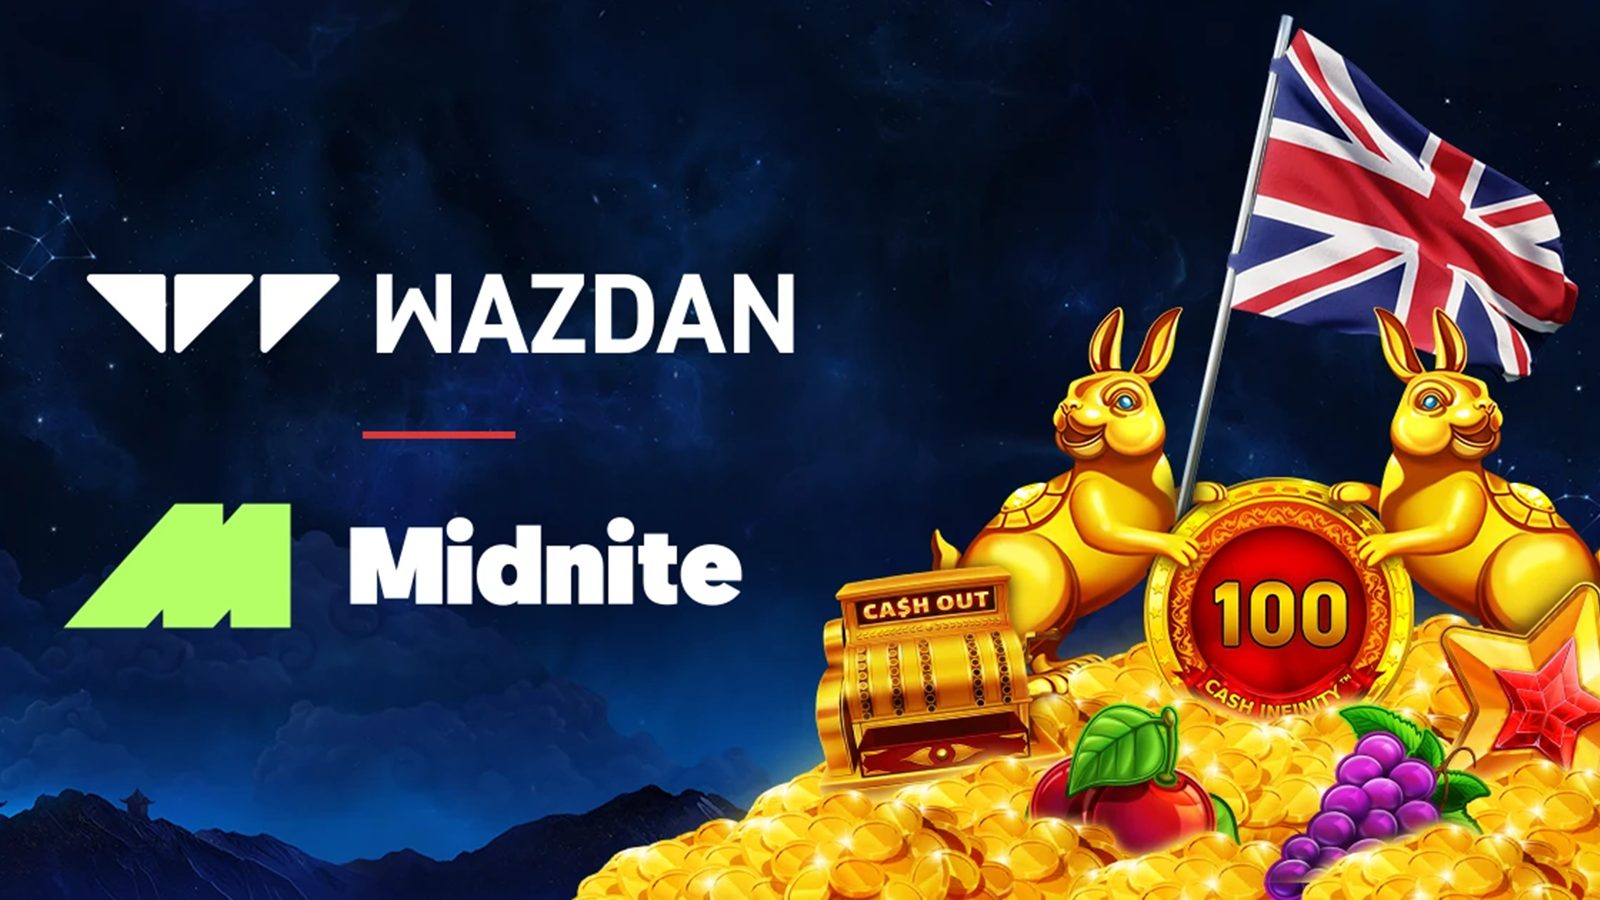 Wazdan and Midnite Partnership